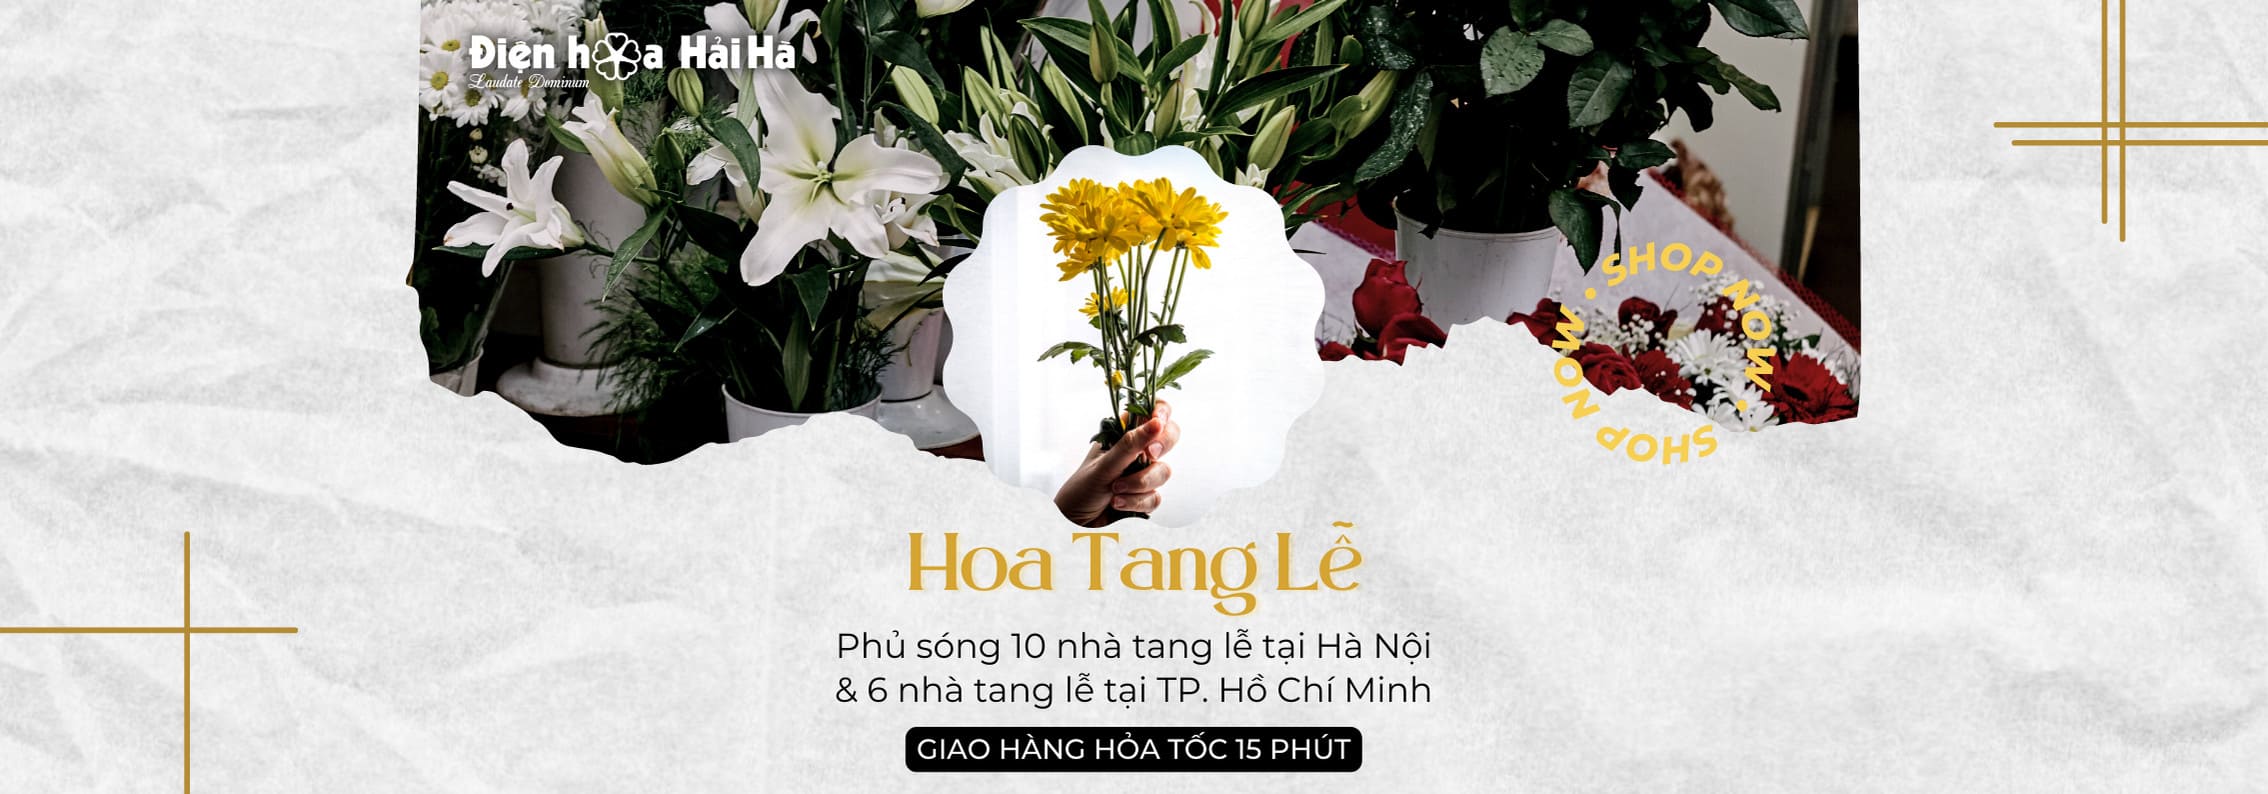 Banner hoa tang lễ dienhoahaiha.com